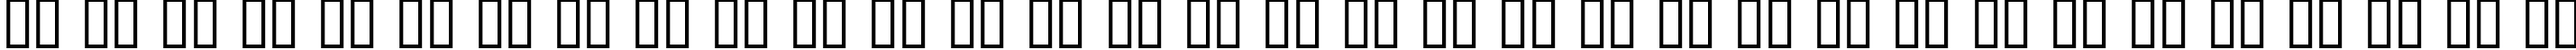 Пример написания русского алфавита шрифтом EndlessShowroom  Black